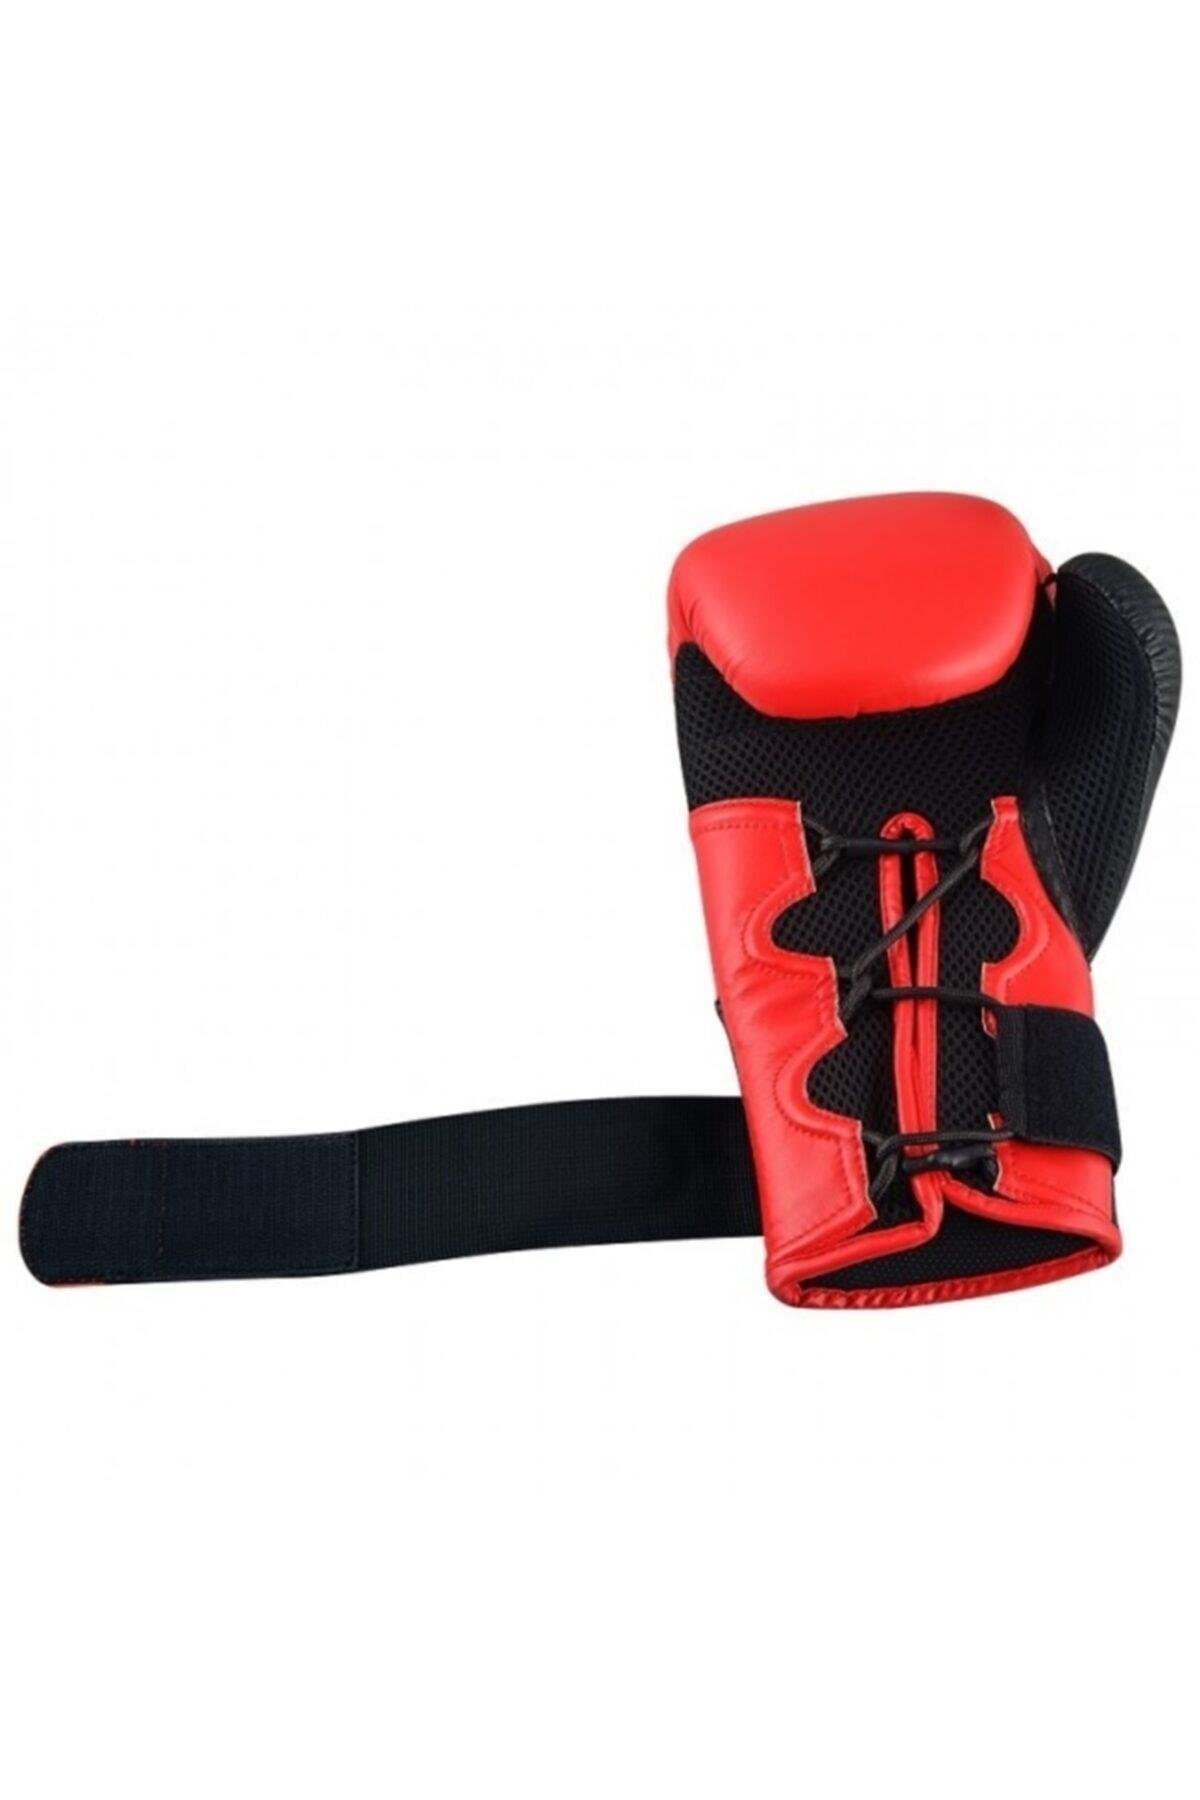 Adidas ADIH250TG Hybrid250 Boks Eldiveni Boxing Gloves - Boksshop